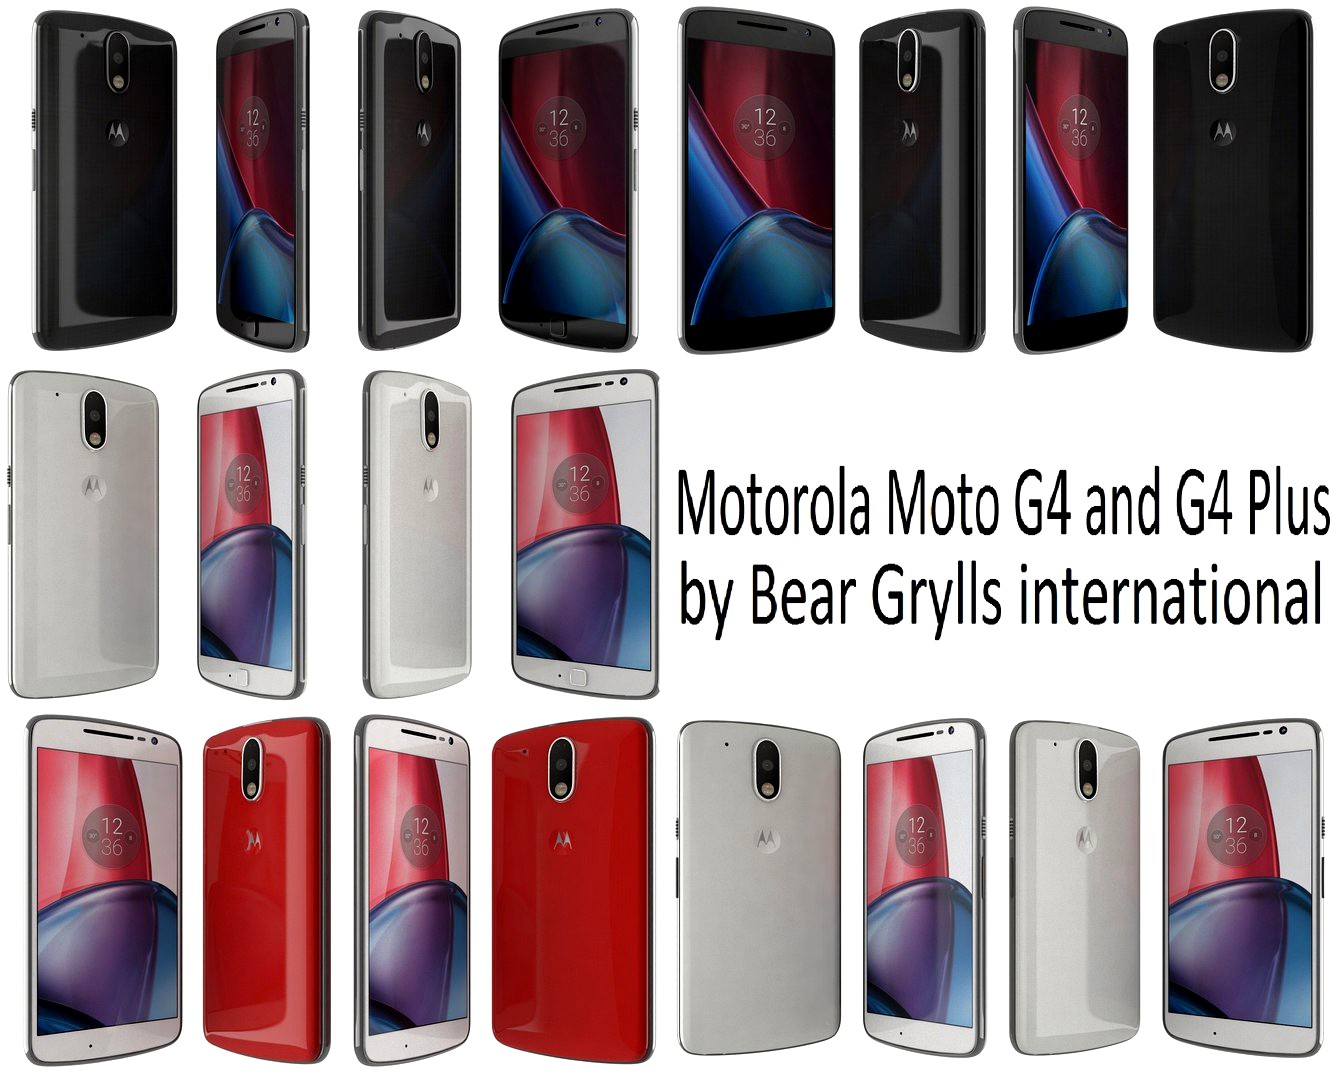 Motorola Moto G4 and G4 Plus